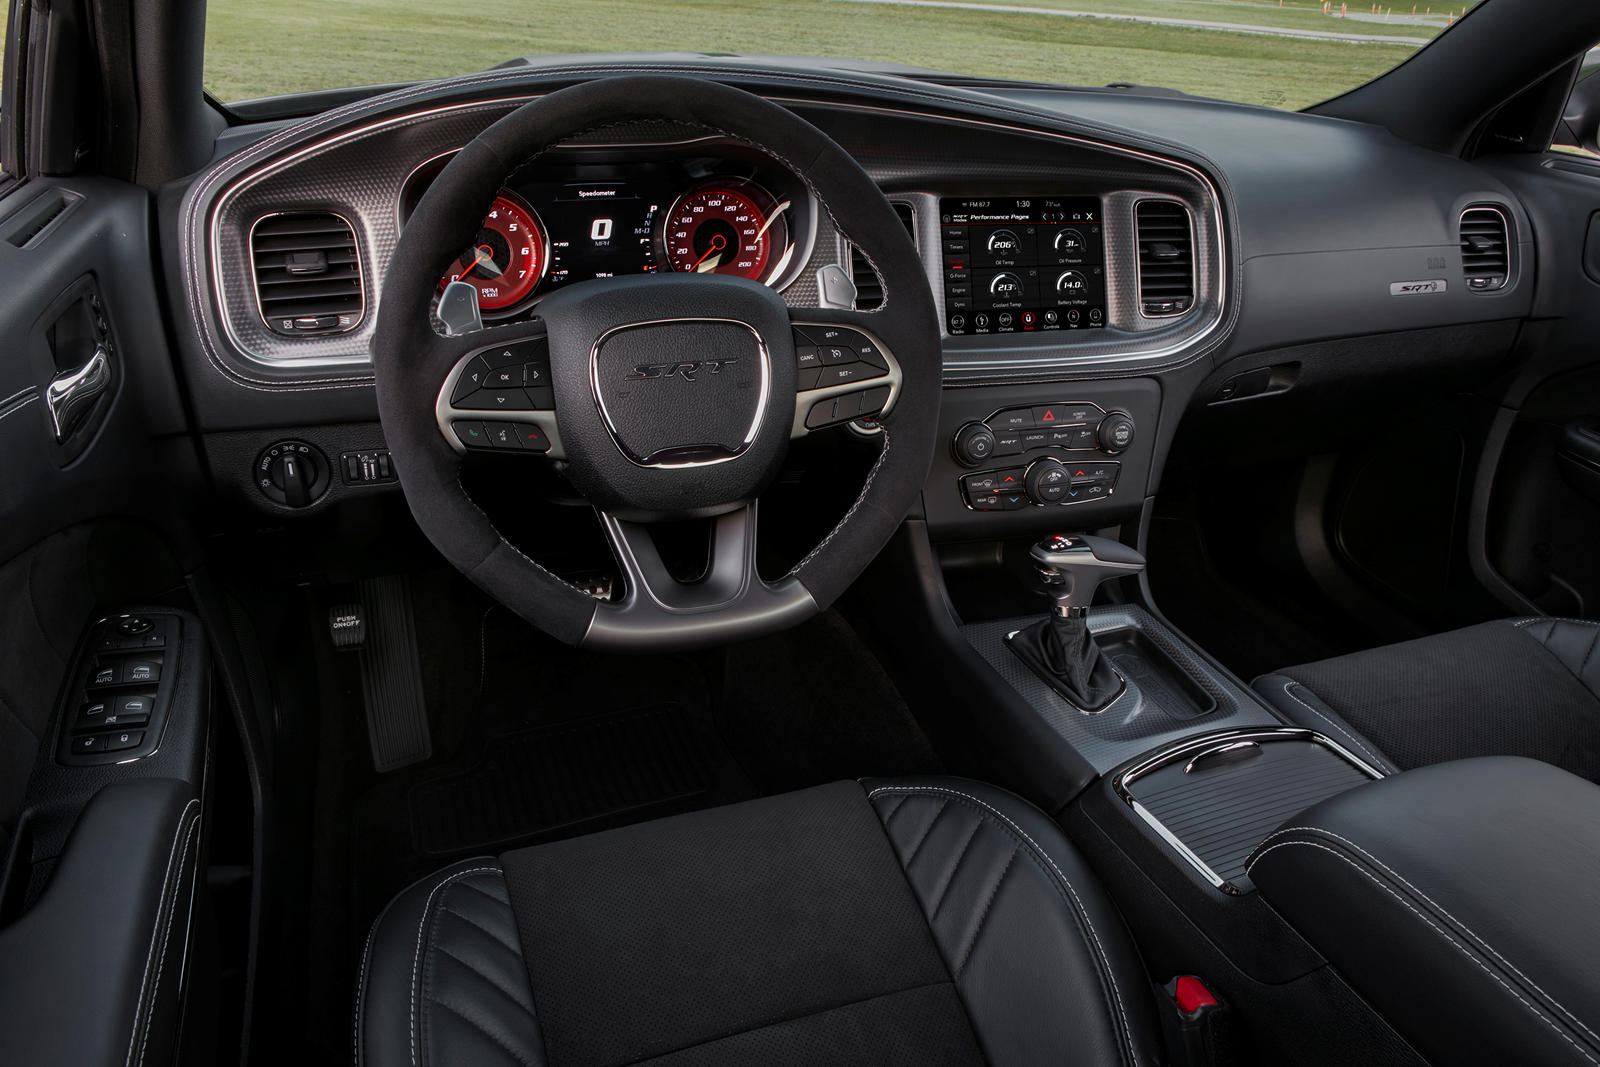 2019 Dodge Charger SRT Hellcat Infotainment System